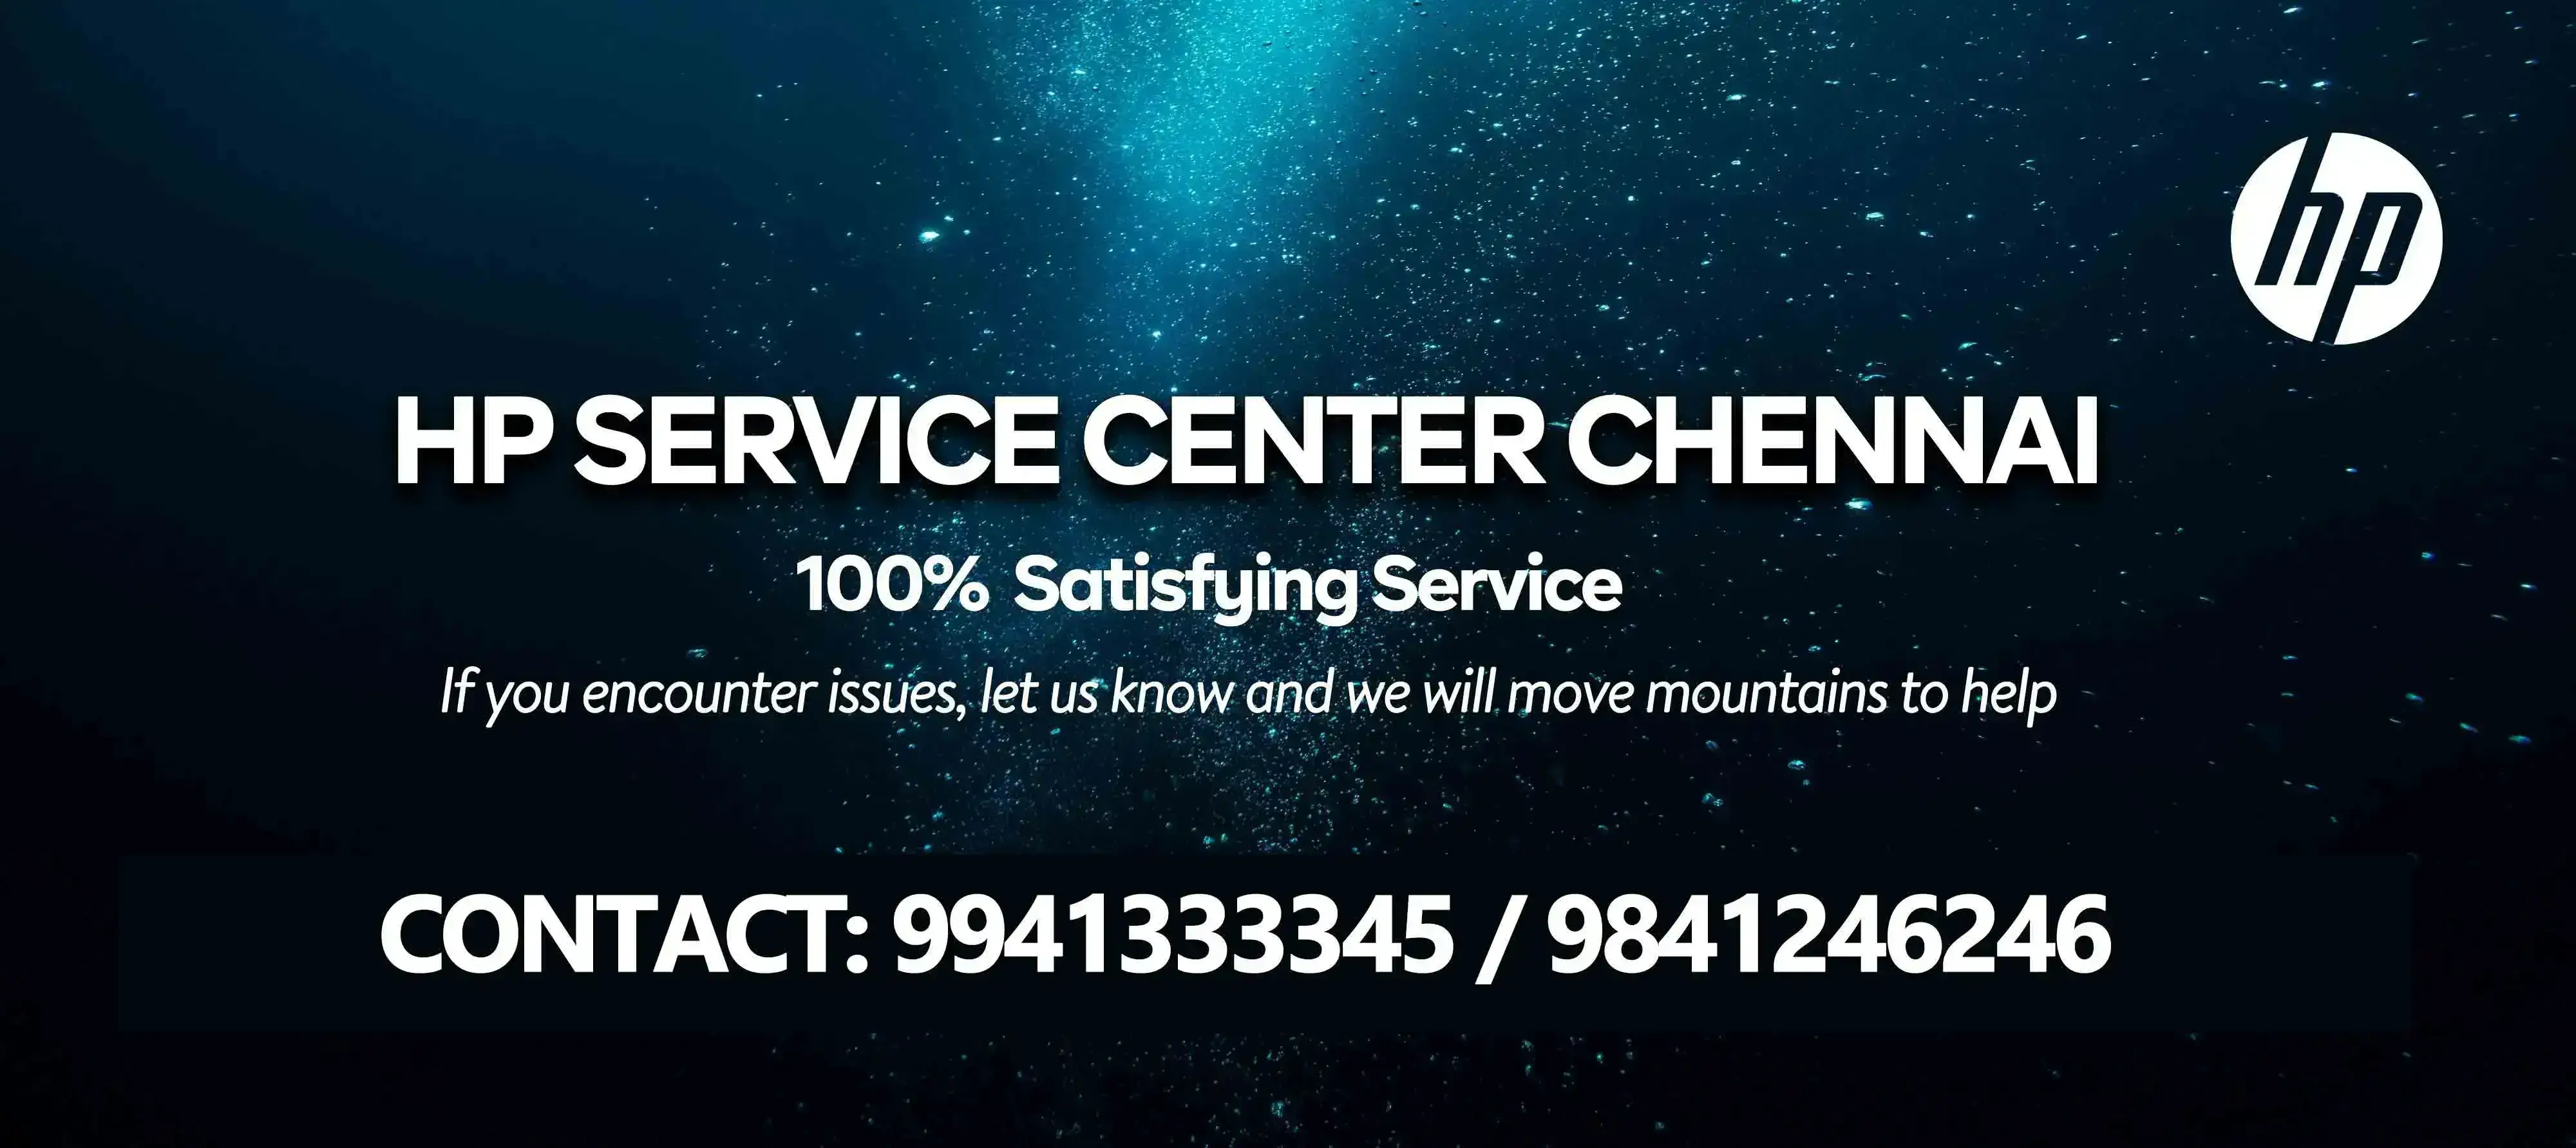 hp service center chennai